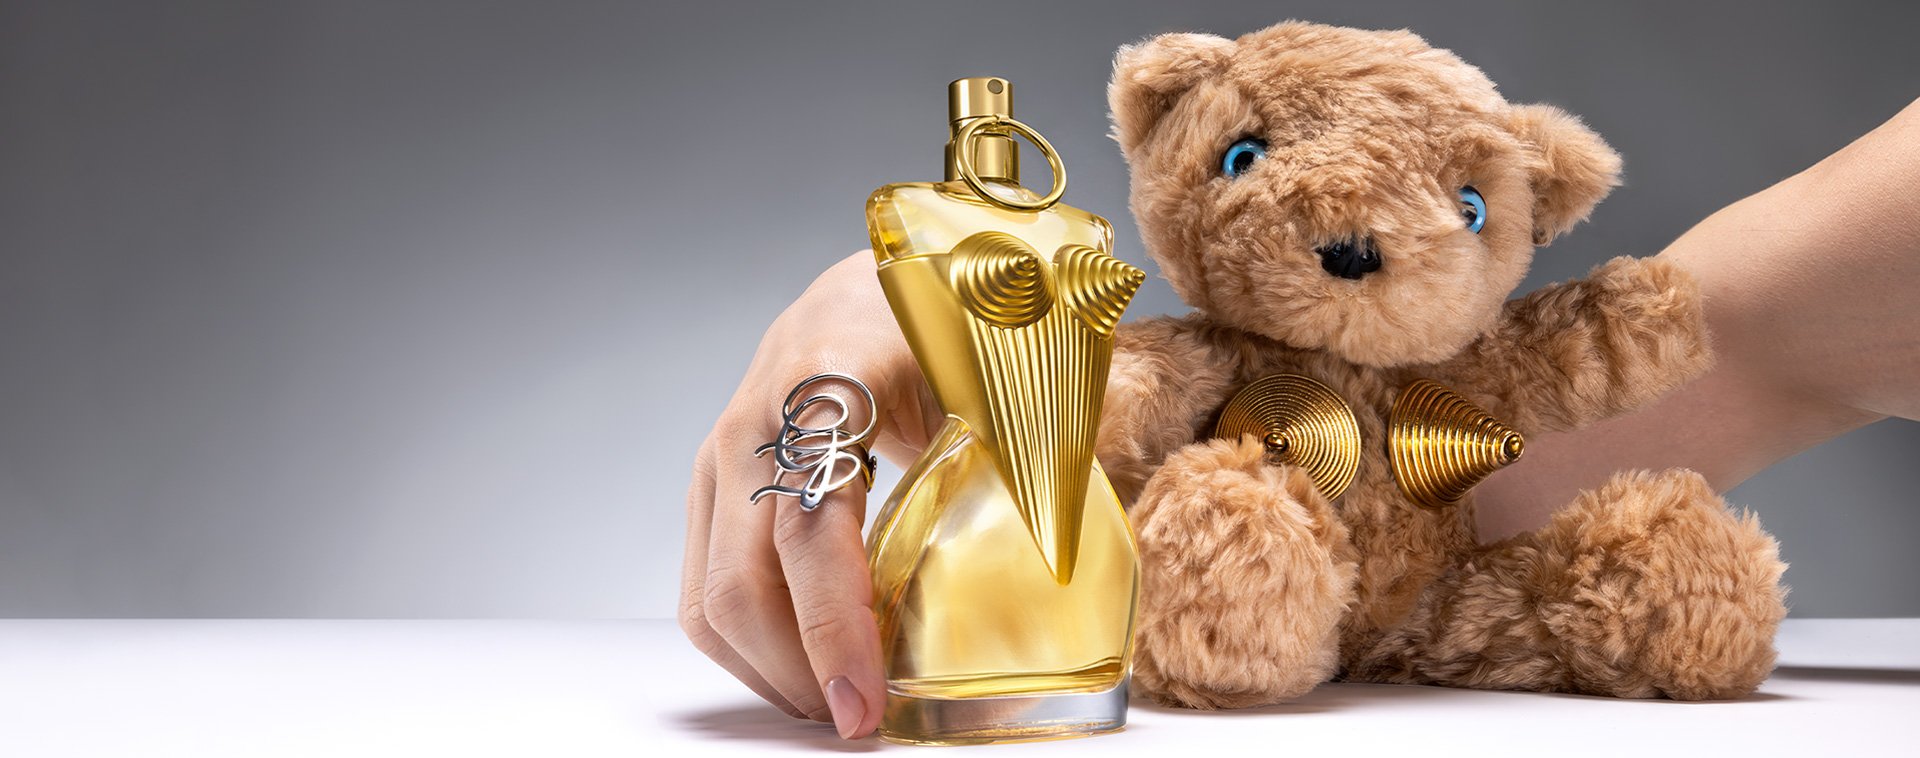 Gaultier Divine Eau de Parfum & Nana bear by Jean Paul Gaultier